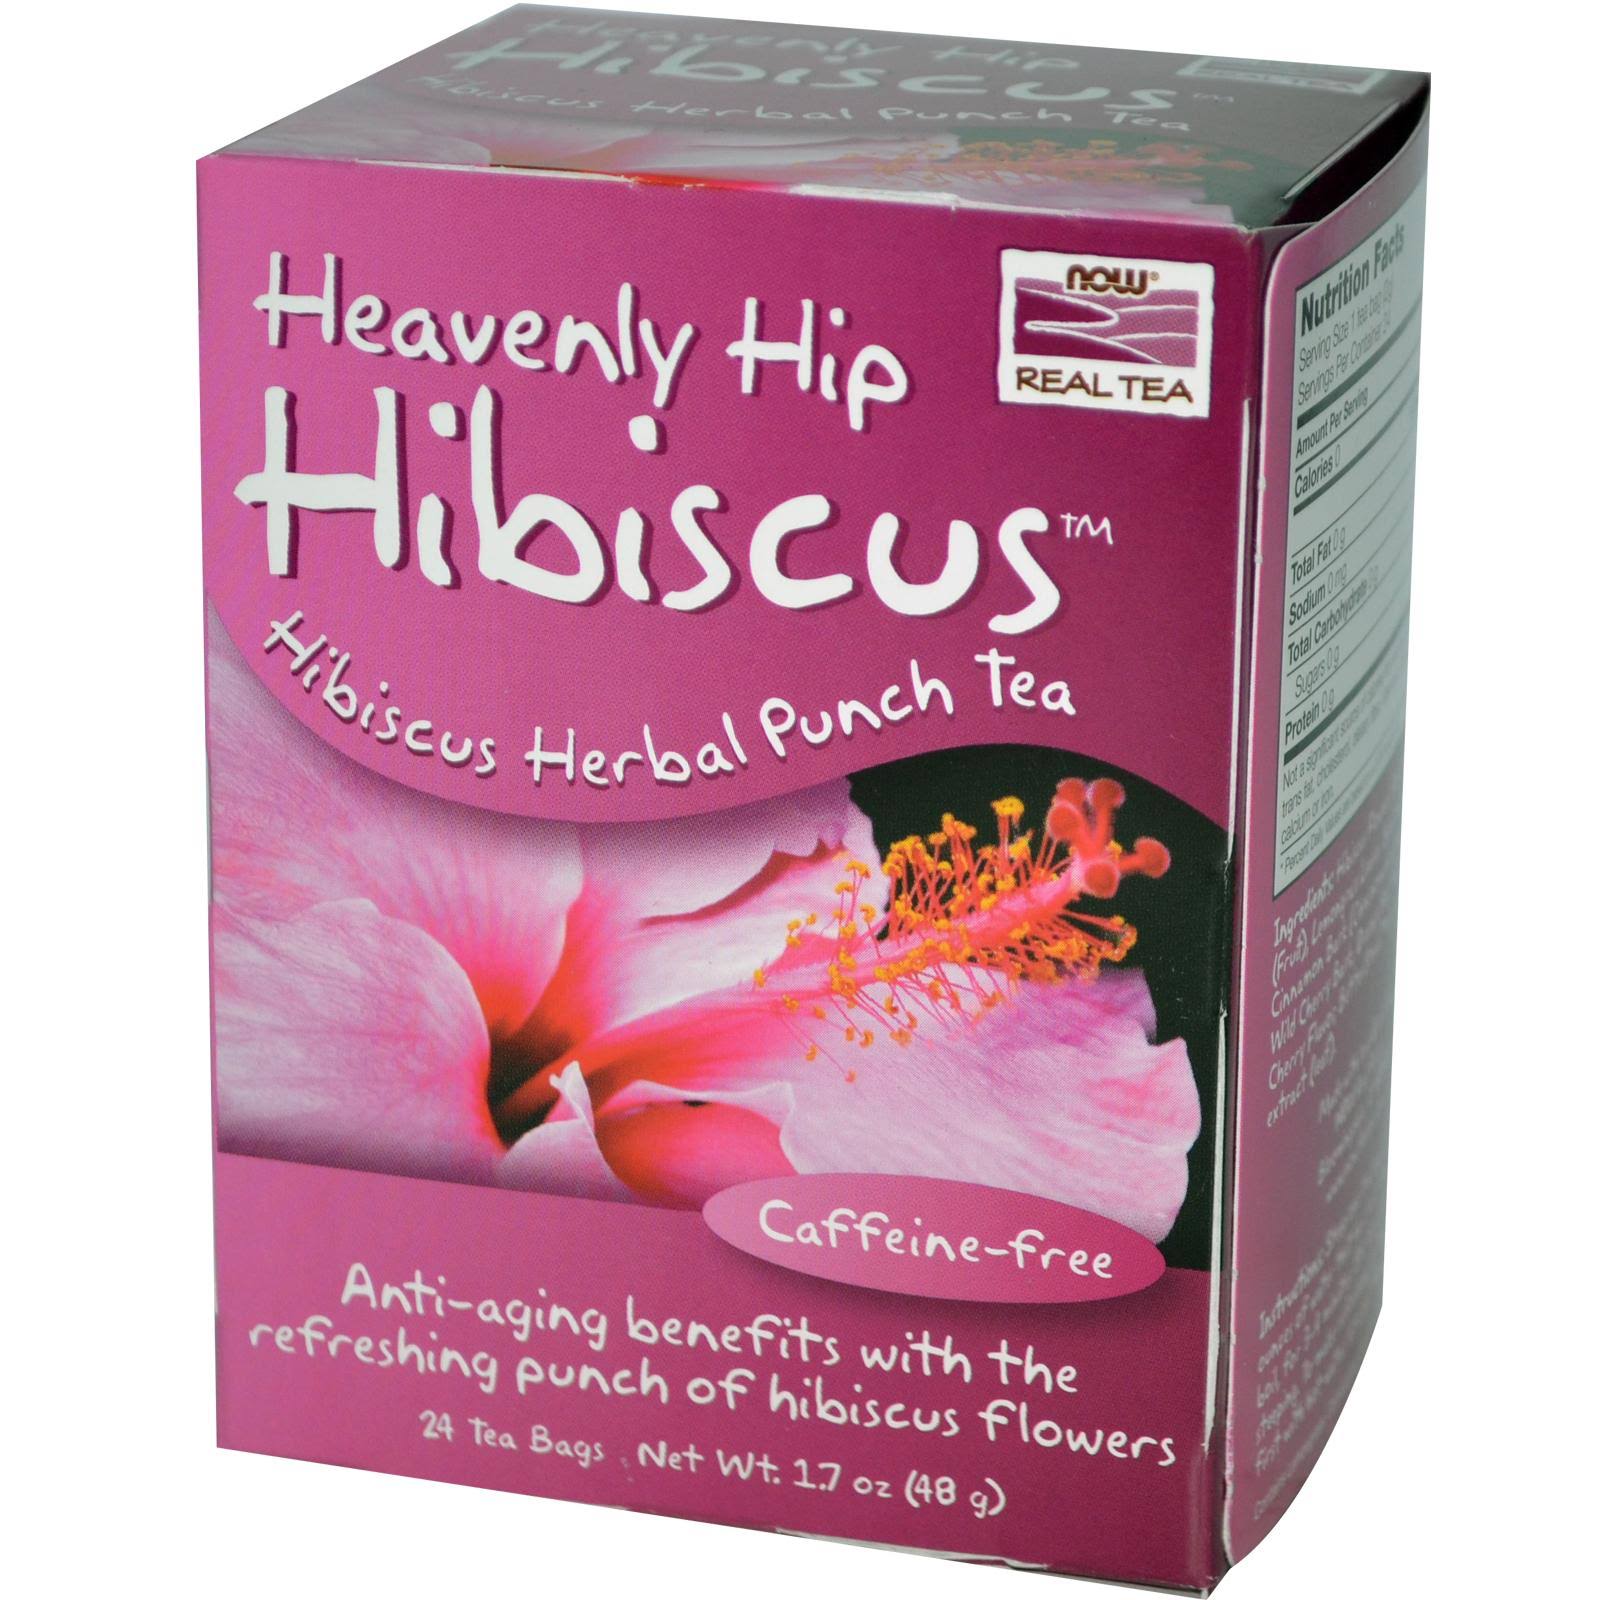 Now Heavenly Hip Hibiscus Herbal Punch Tea - x24